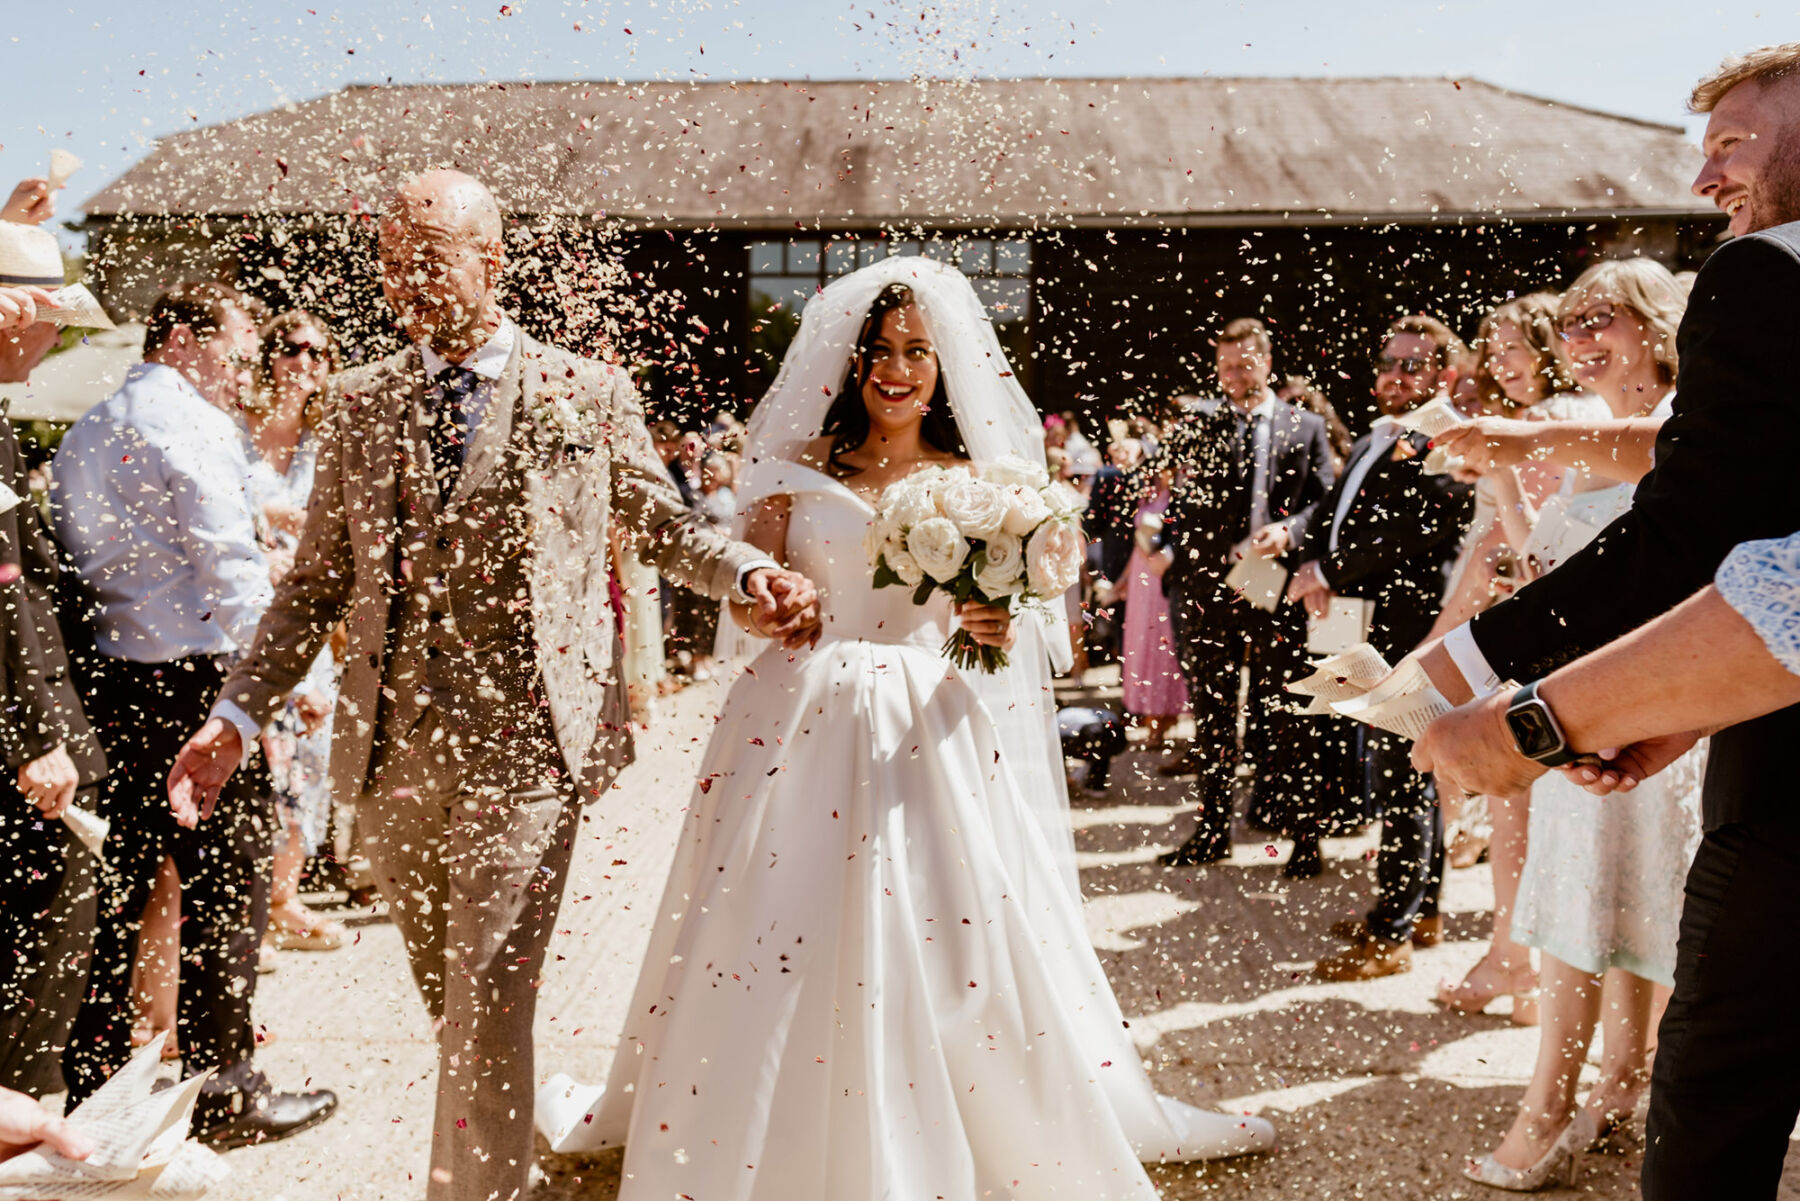 Confetti, Upwaltham Barns wedding venue, Bride wears Suzanne Neville wedding dress & veil from Miss Bush bridal boutique, Surrey, UK.